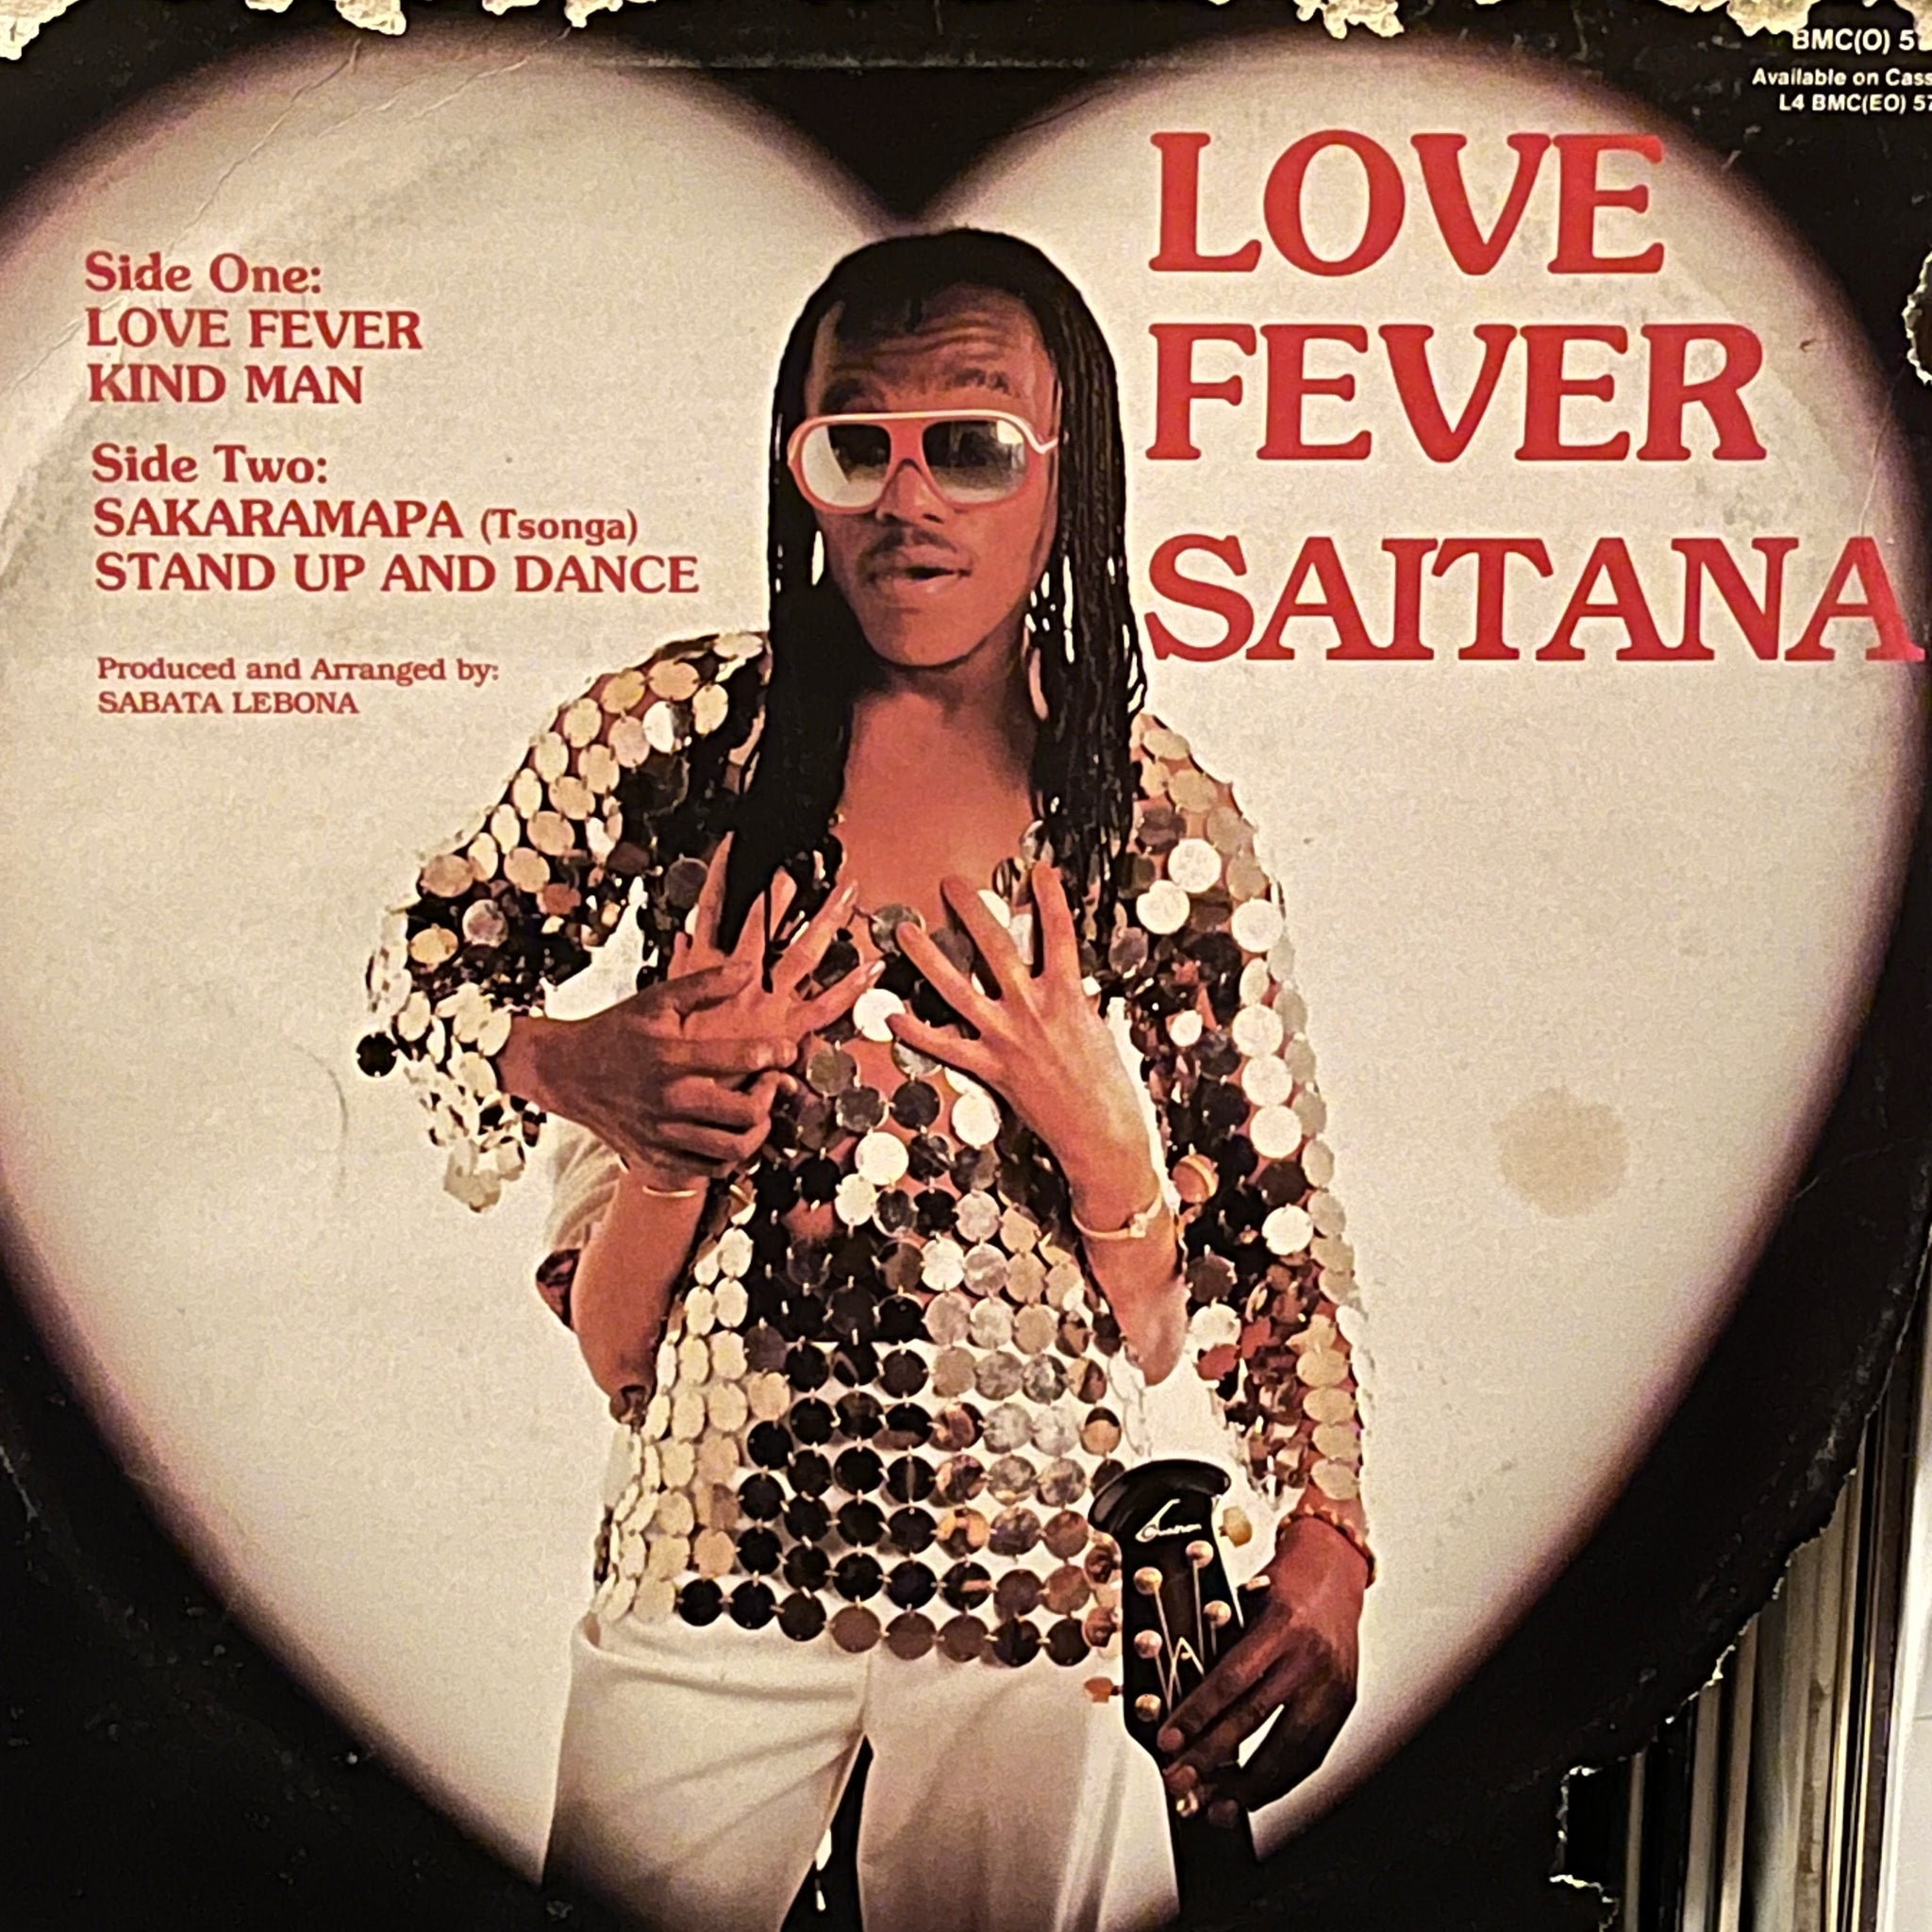 Saitana – Love Fever